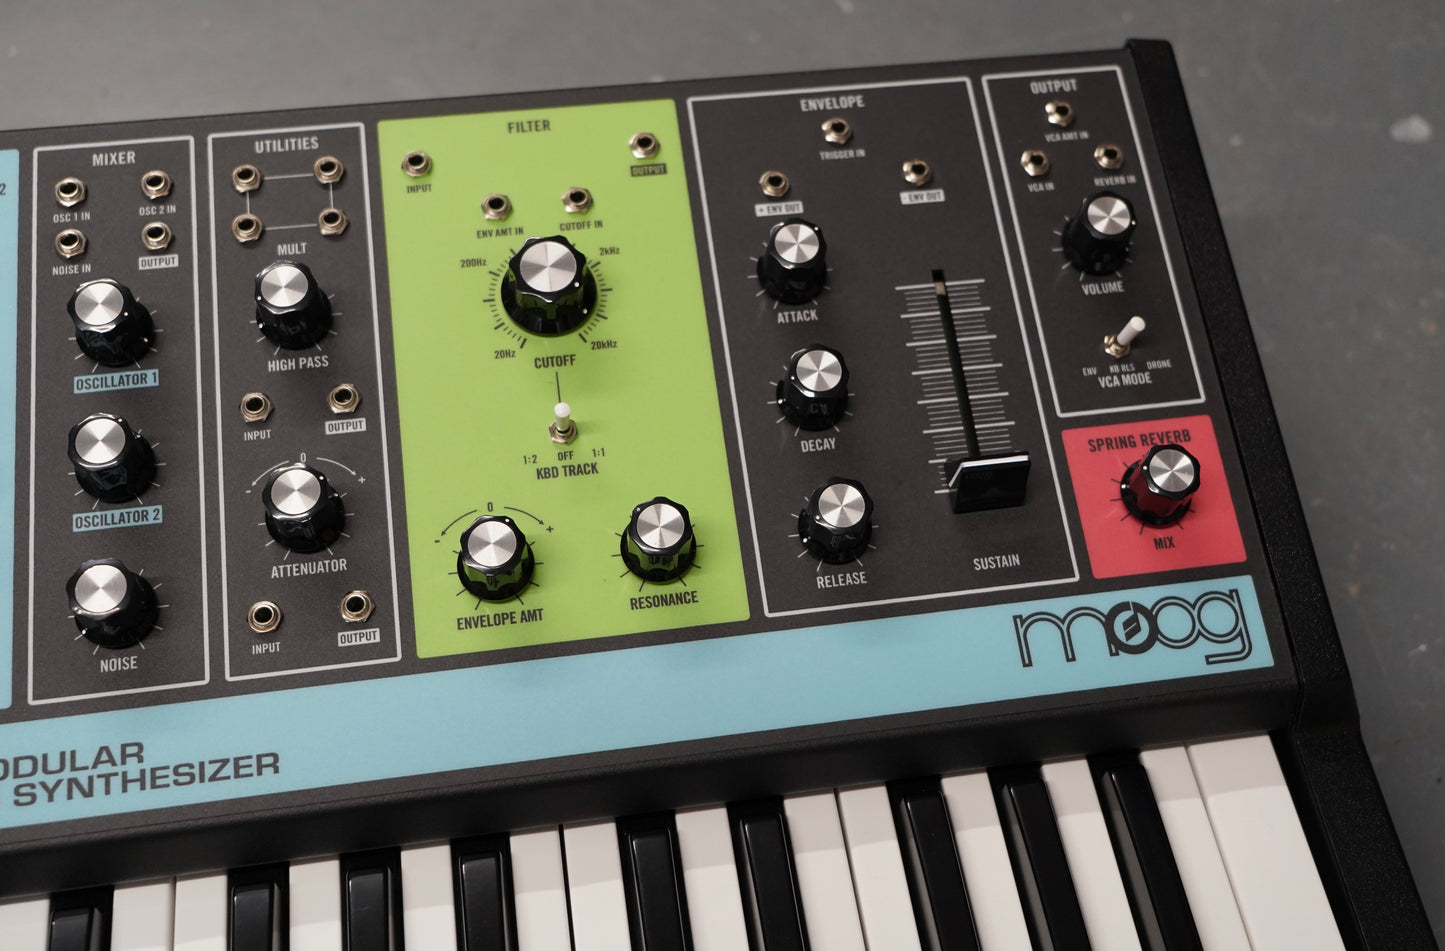 Moog Grandmother Semi-Modular Analog Synthesizer